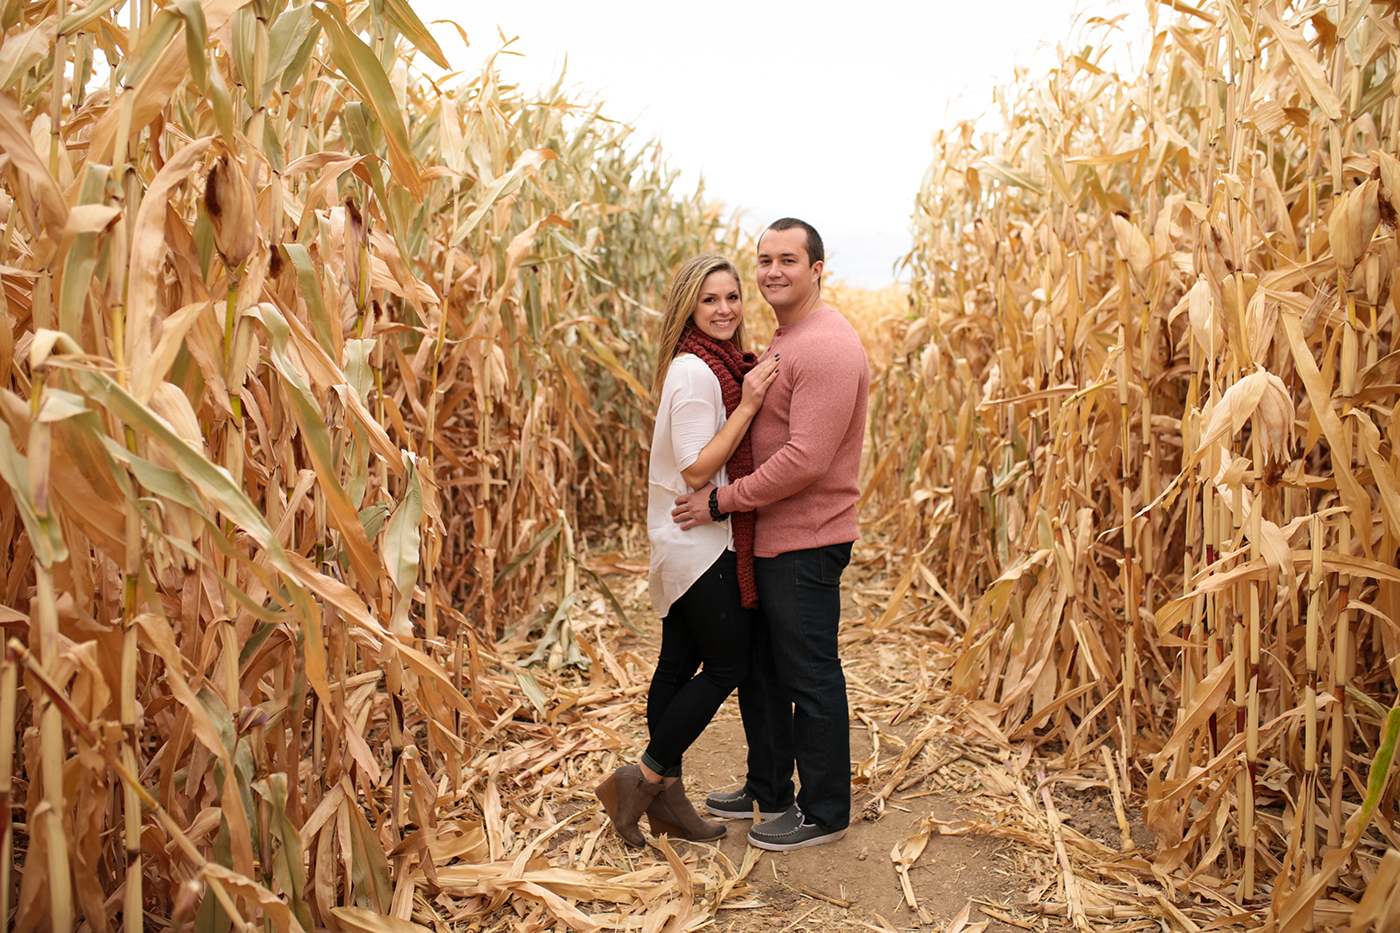 corn maze couples anniversary portrait Love autumn pumpkins Fall the farmstead idahome